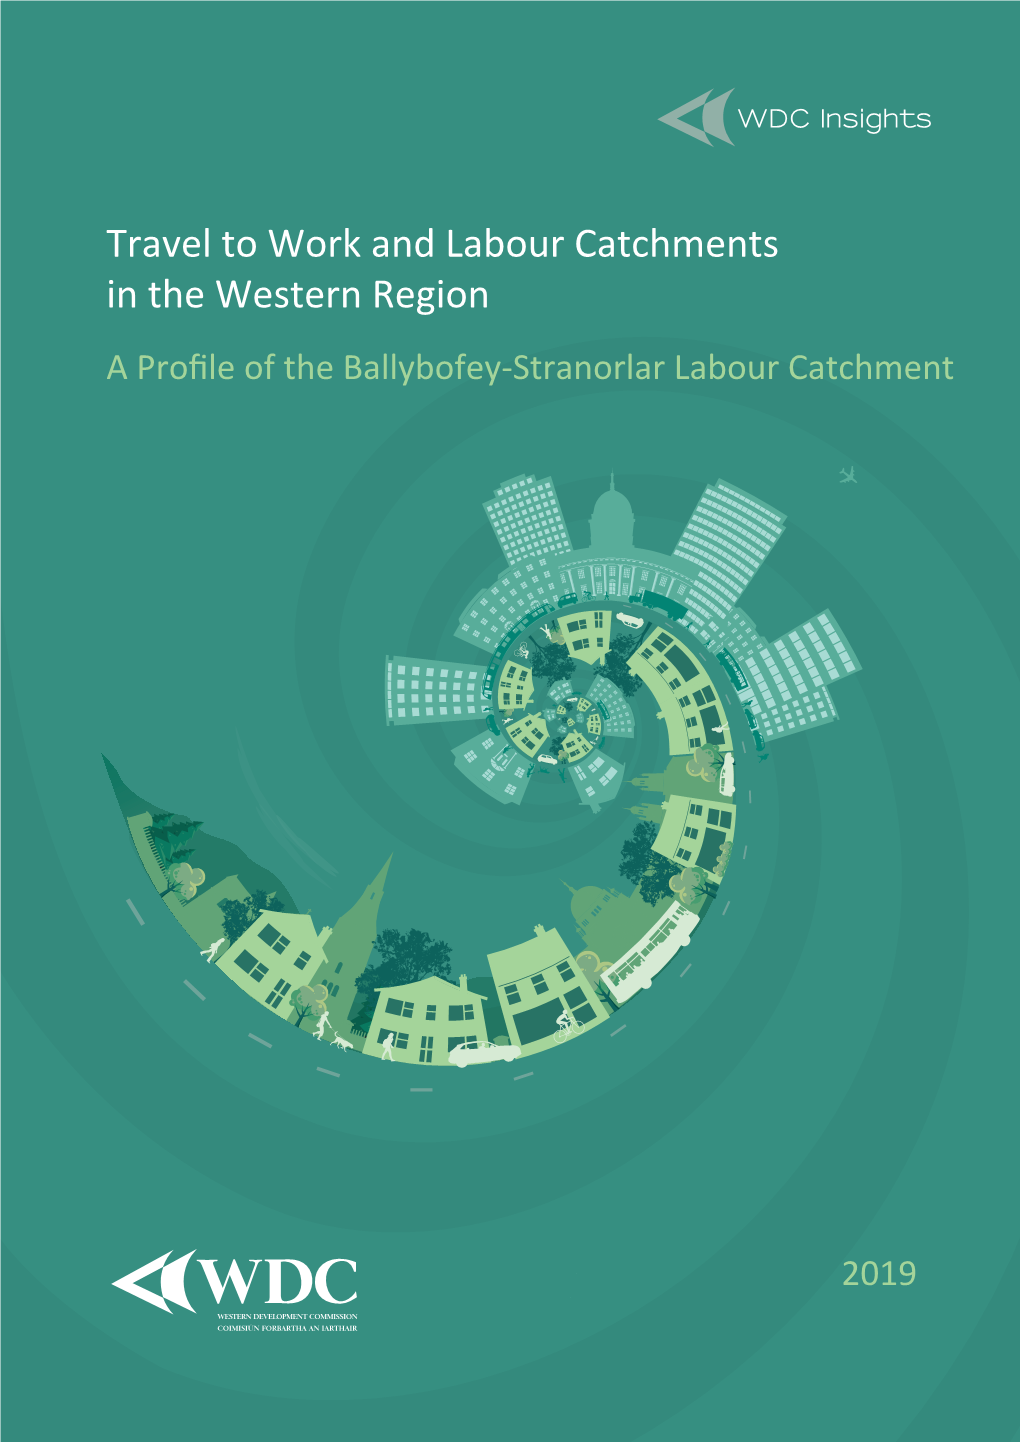 Ballybofey-Stranorlar Labour Catchment